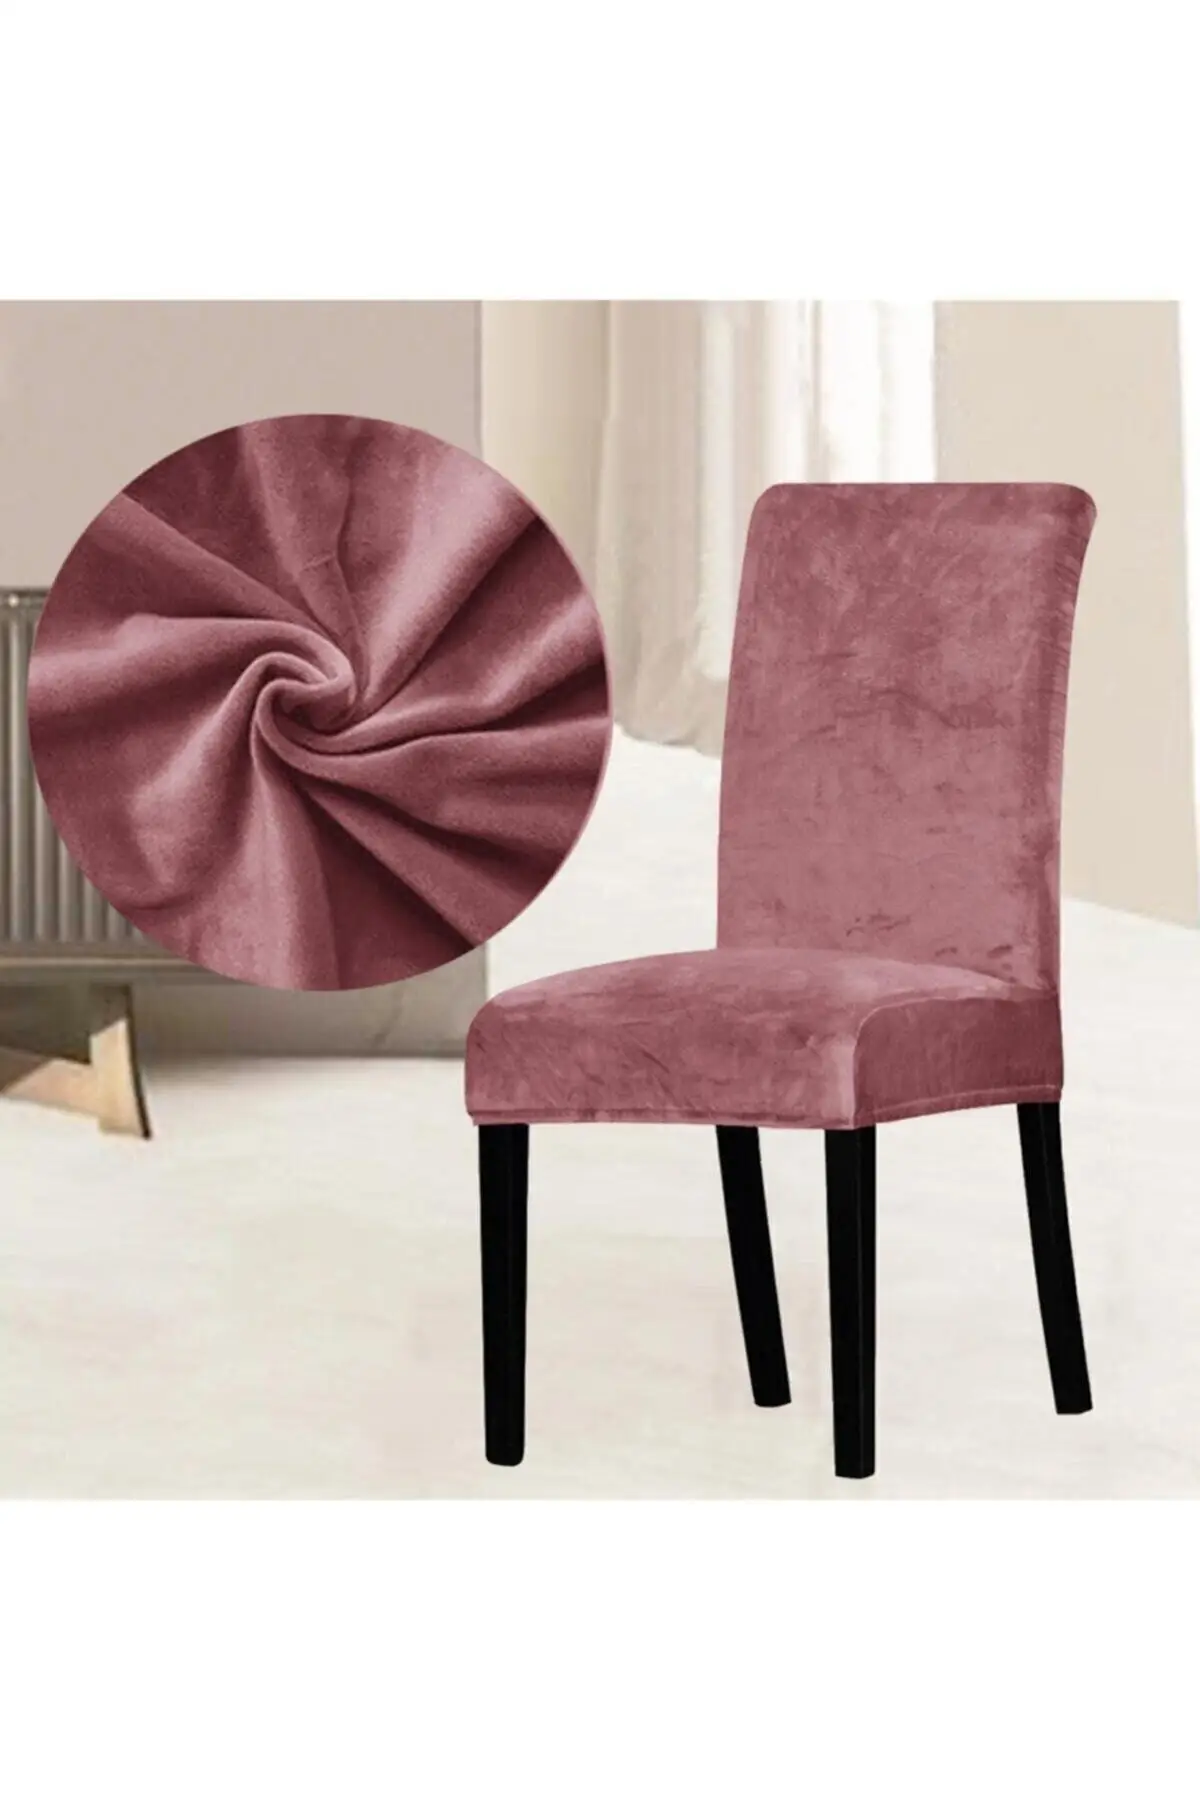 

Rose Dried Aspect Lycra Tires Velvet Fabric 6-Li Chair Case 170x210 Pink Seat Cover Salon Textile Home